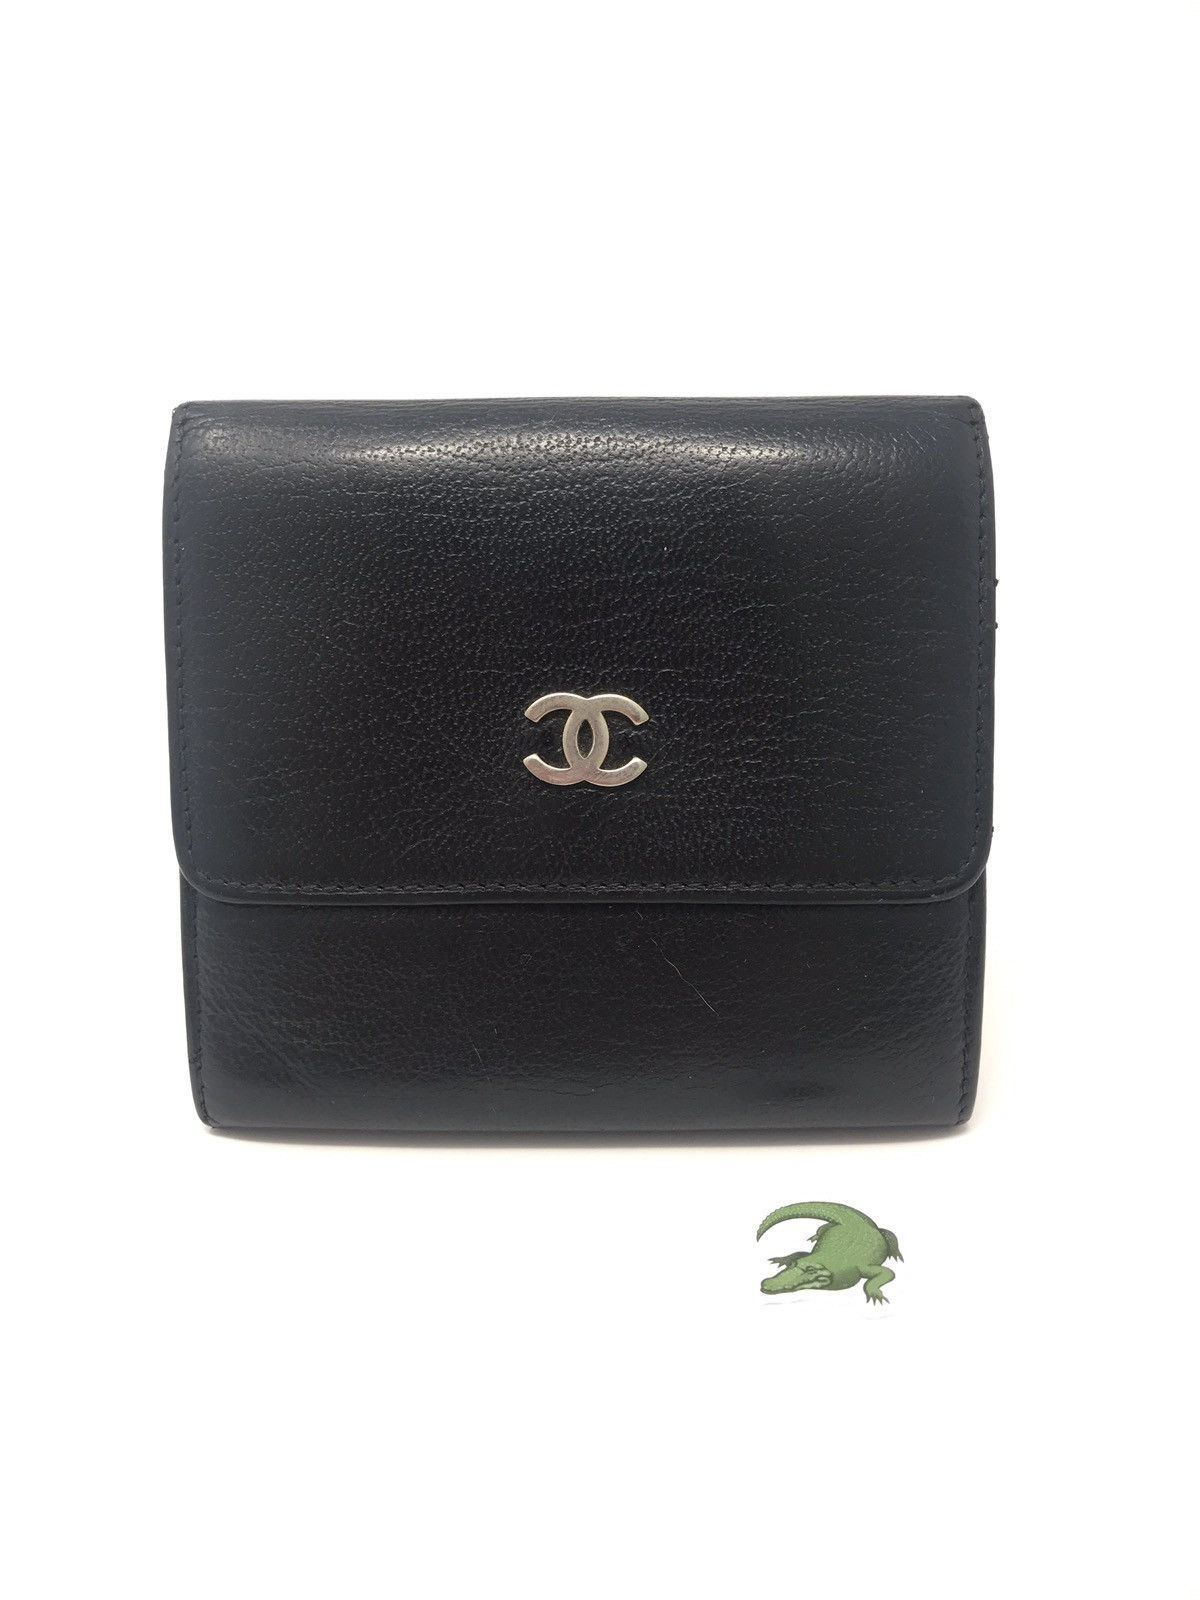 Chanel Bifold Wallet Black | Grailed